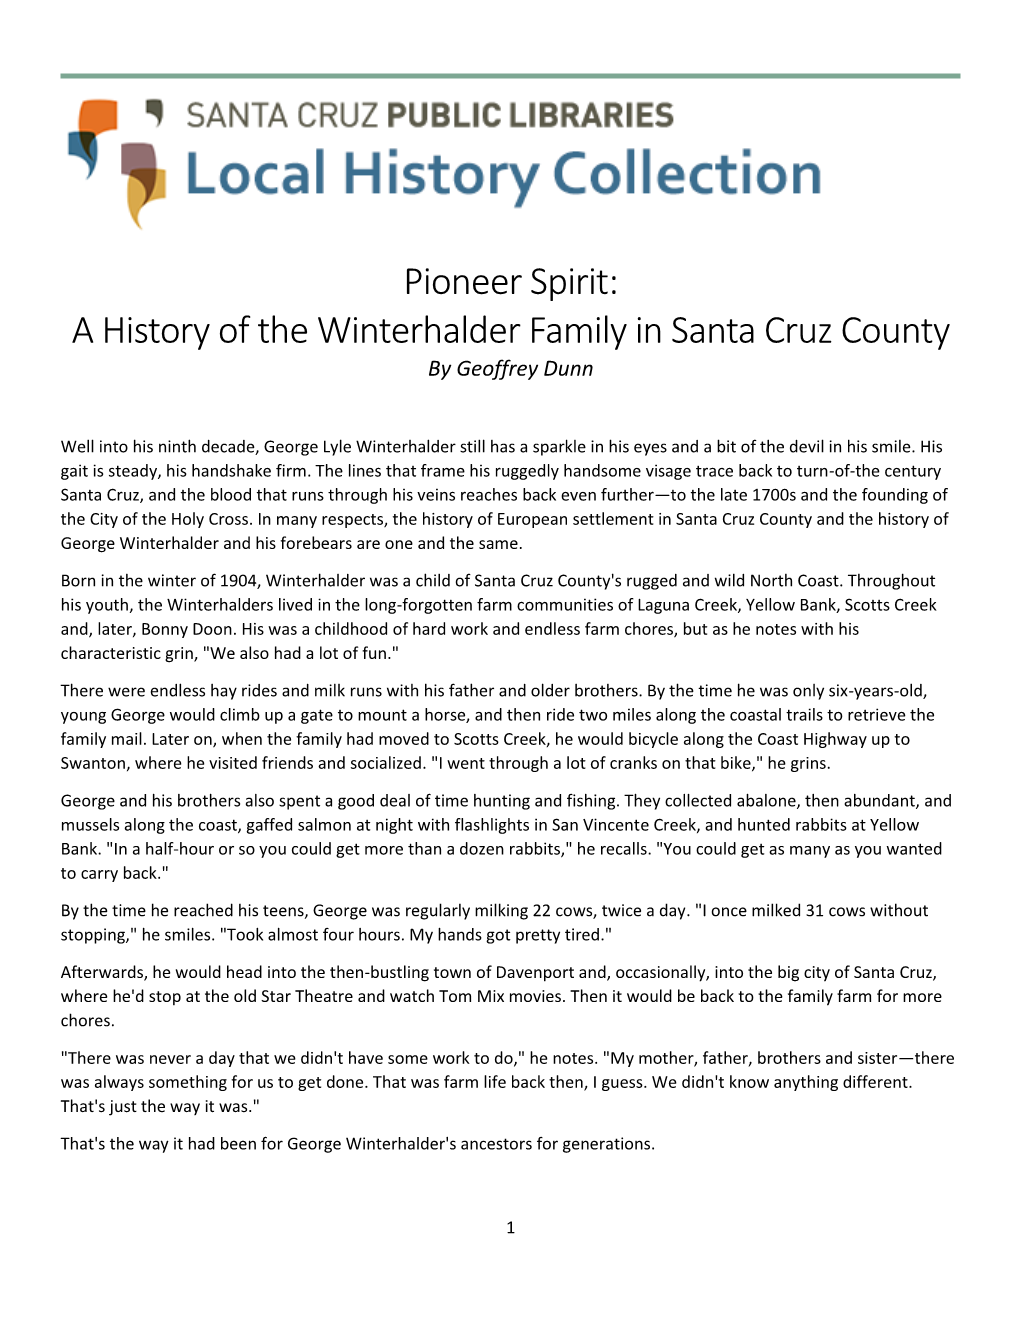 A History of the Winterhalder Family in Santa Cruz County by Geoffrey Dunn